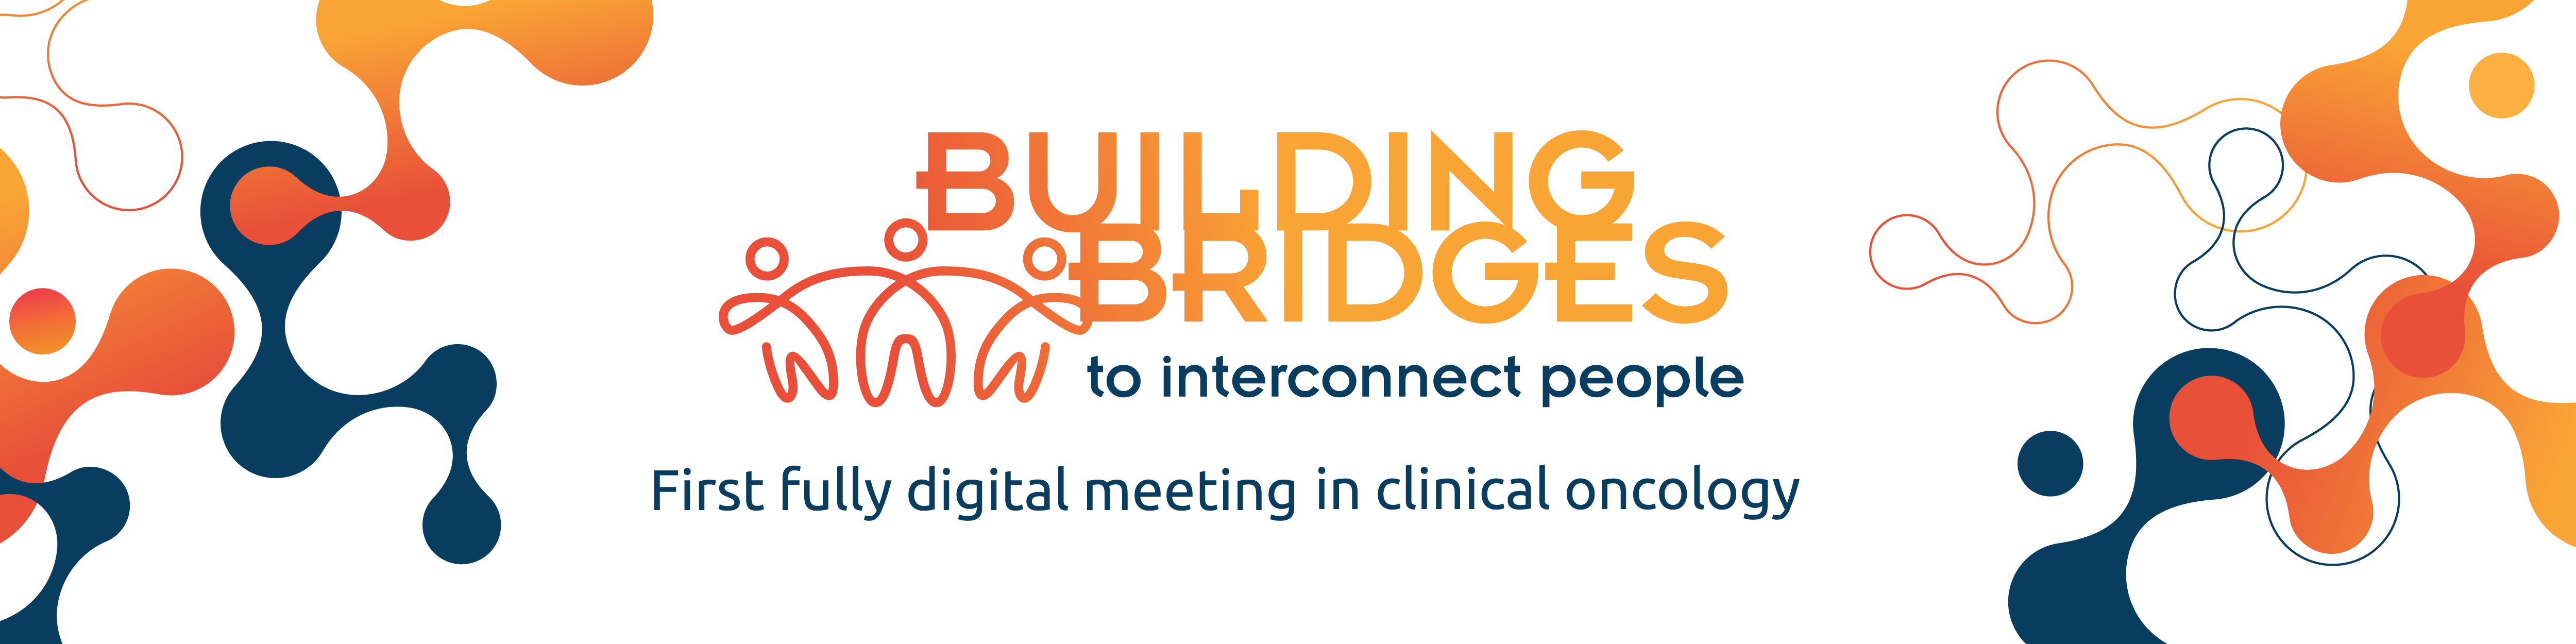 BUILDING_BRIDGES_TO_INTERCONNECT_PEOPLE